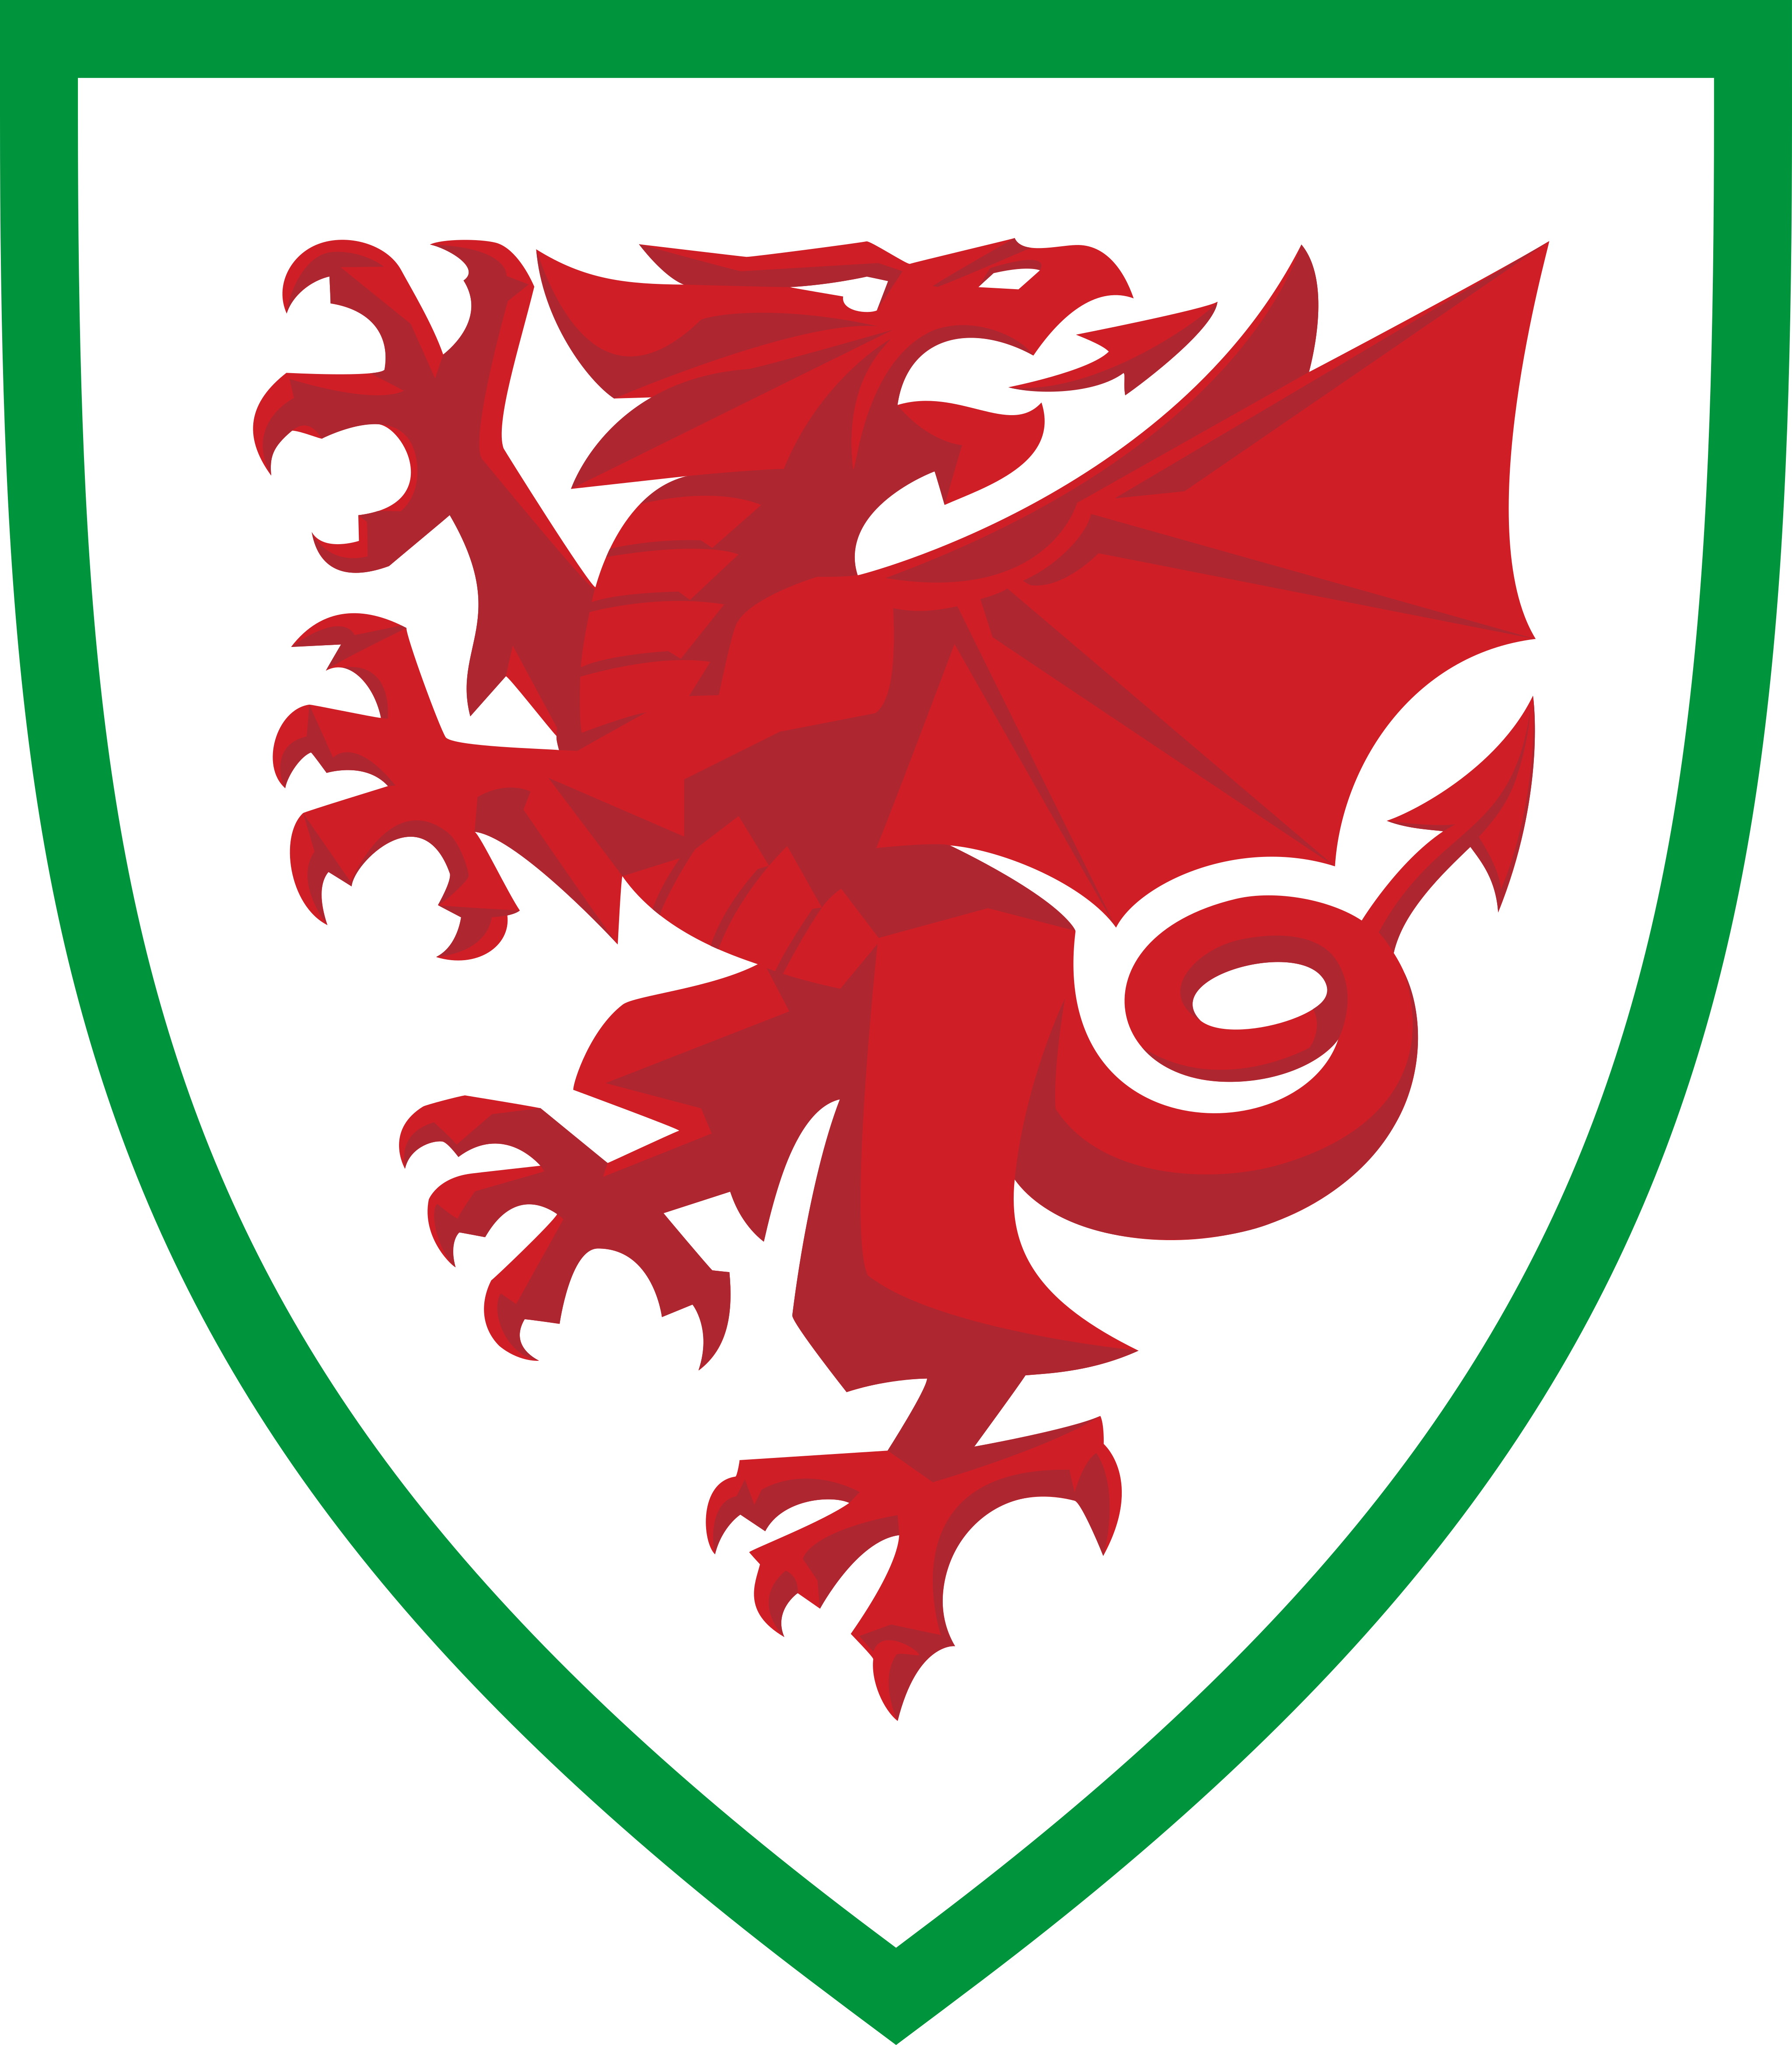 wales national football team logo - Wales National Football Team Logo